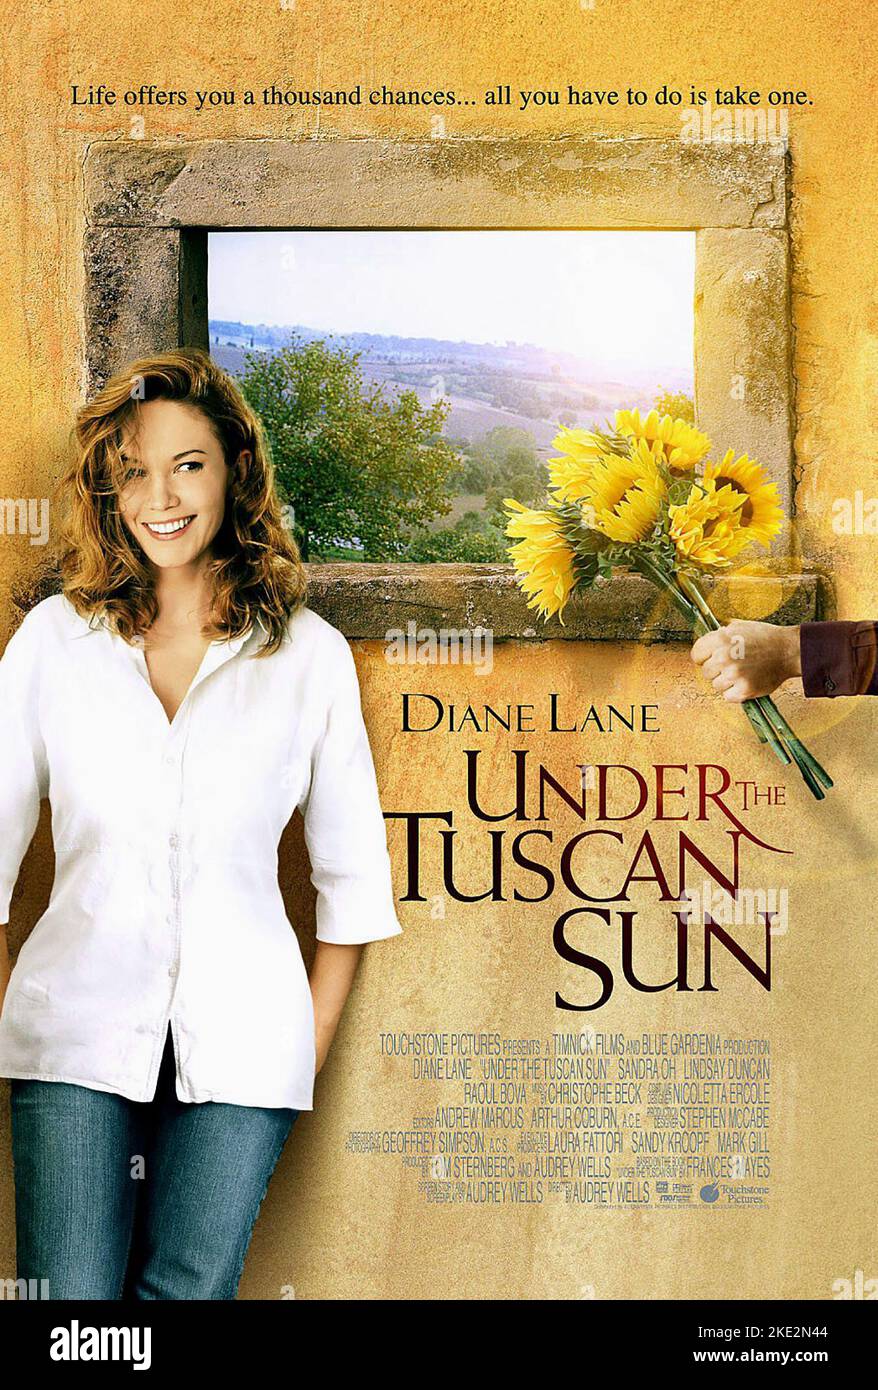 UNDER THE TUSCAN SUN, DIANE LANE, 2003 Stock Photo